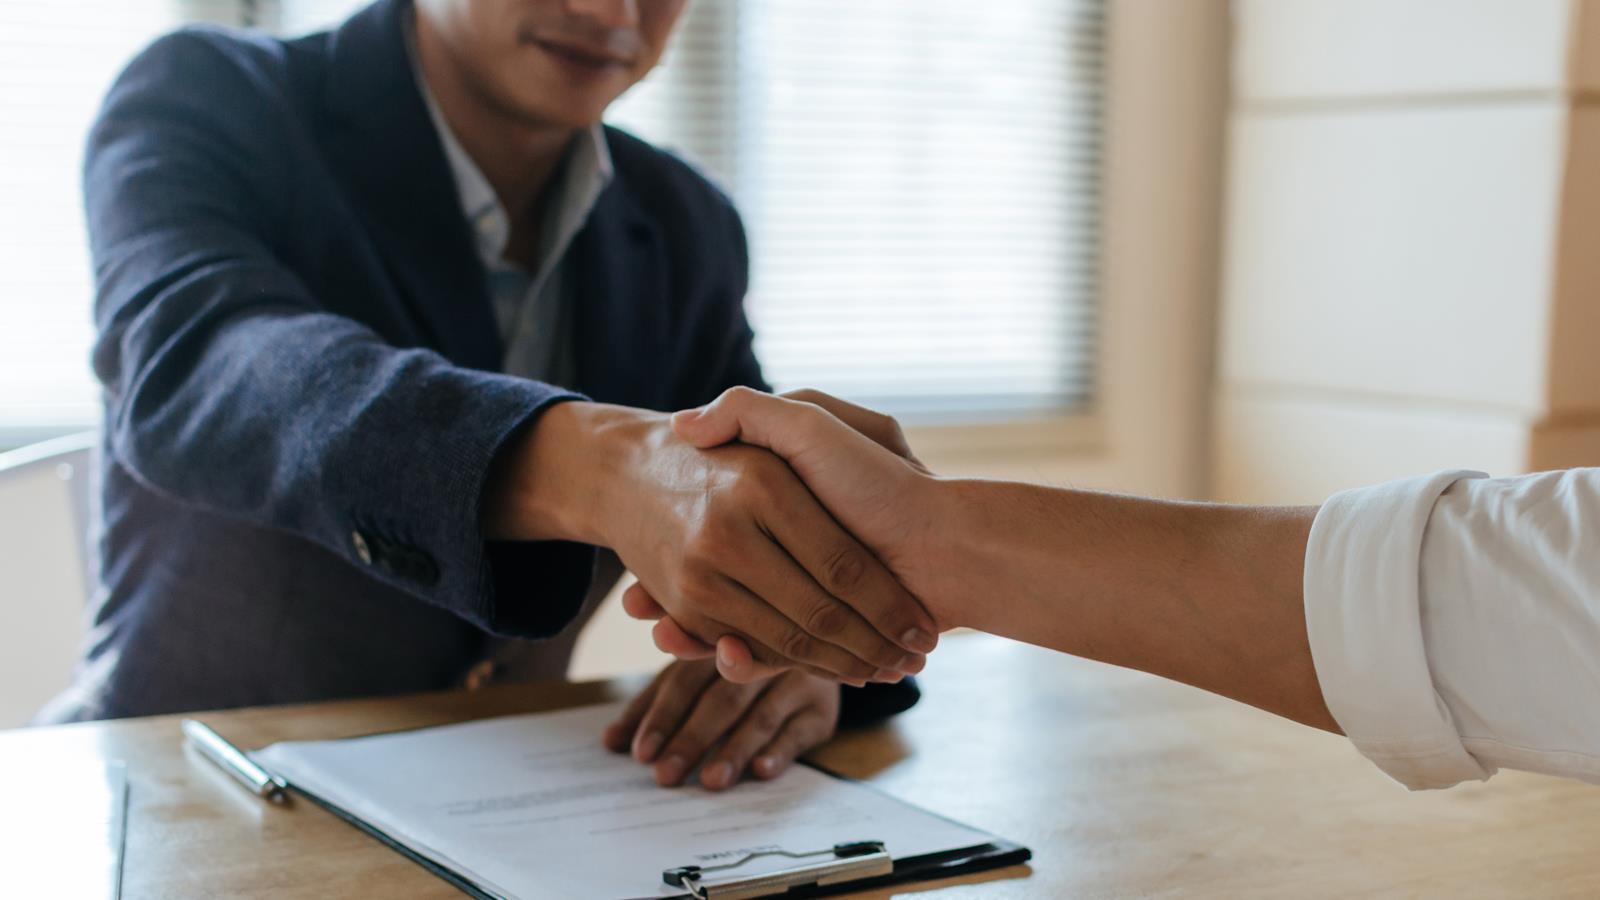 Handshake at job interview